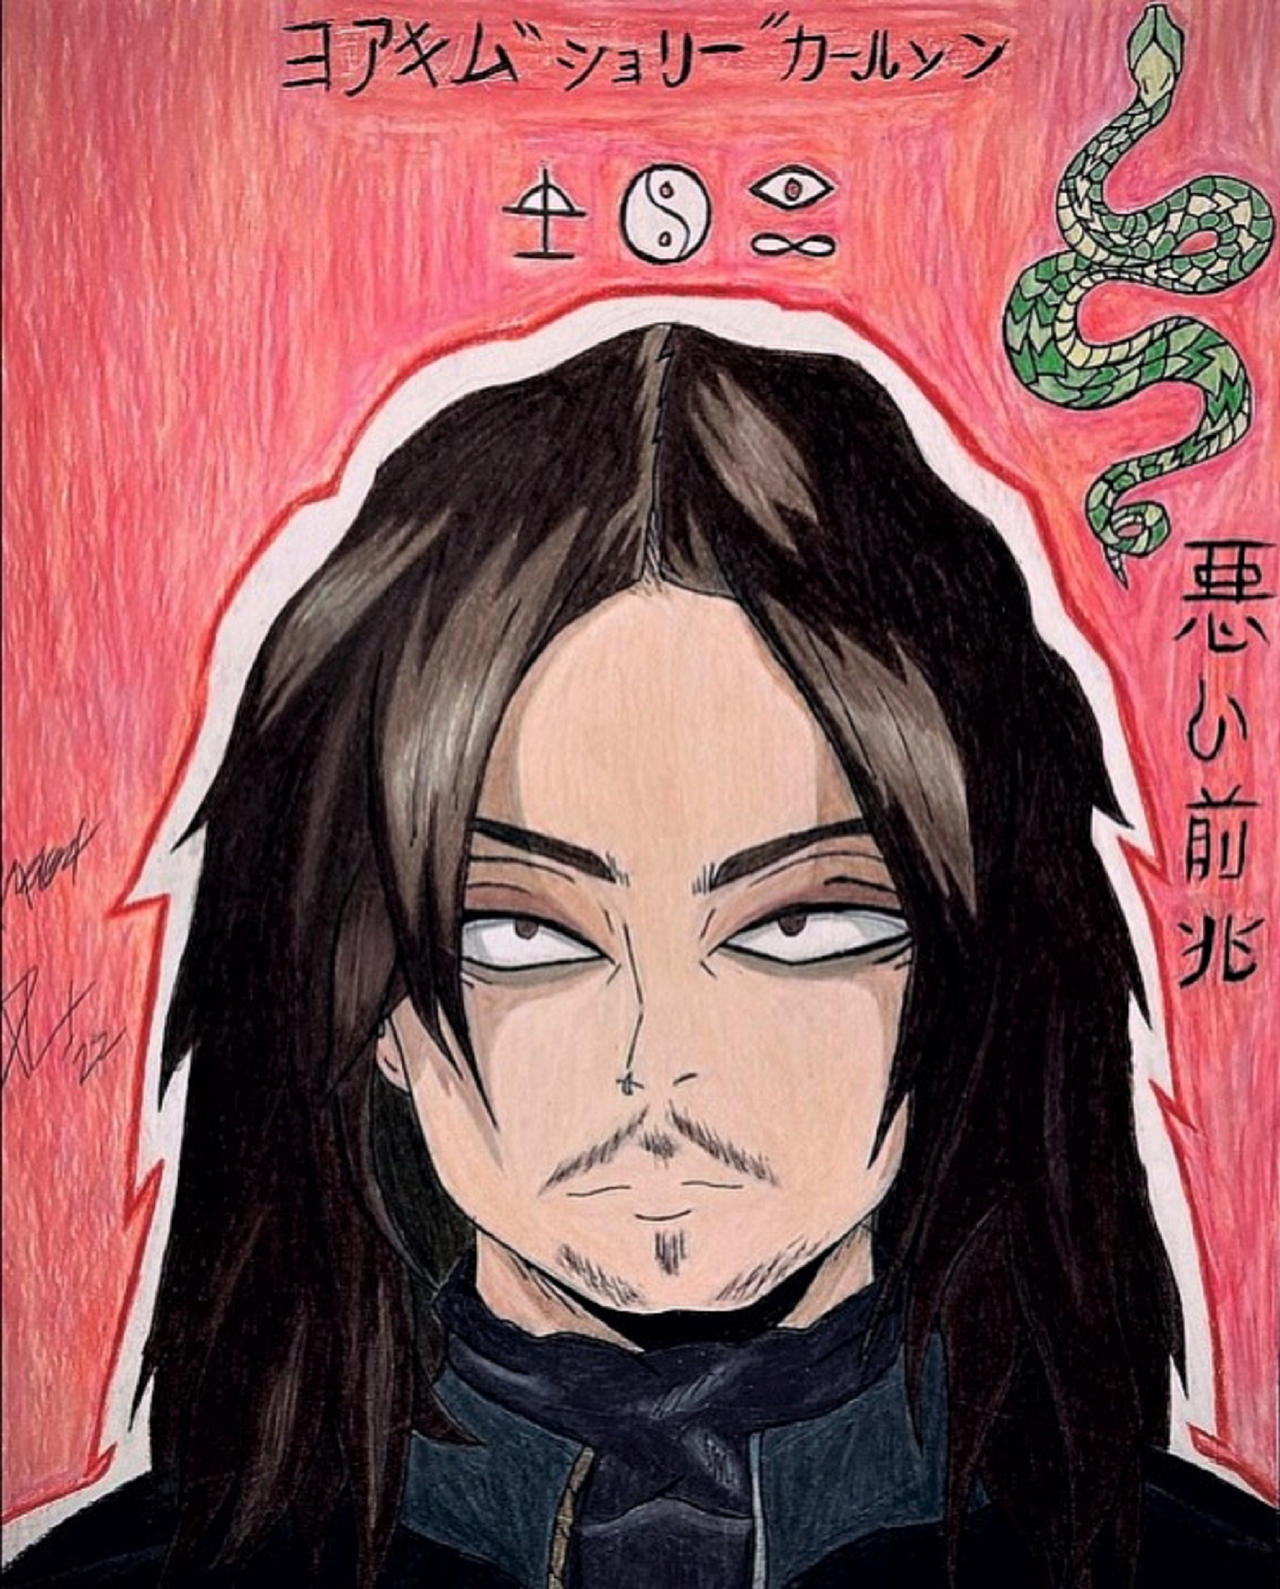 L Lawliet/Ryuzaki - Death Note by PuddinGal4302 on DeviantArt